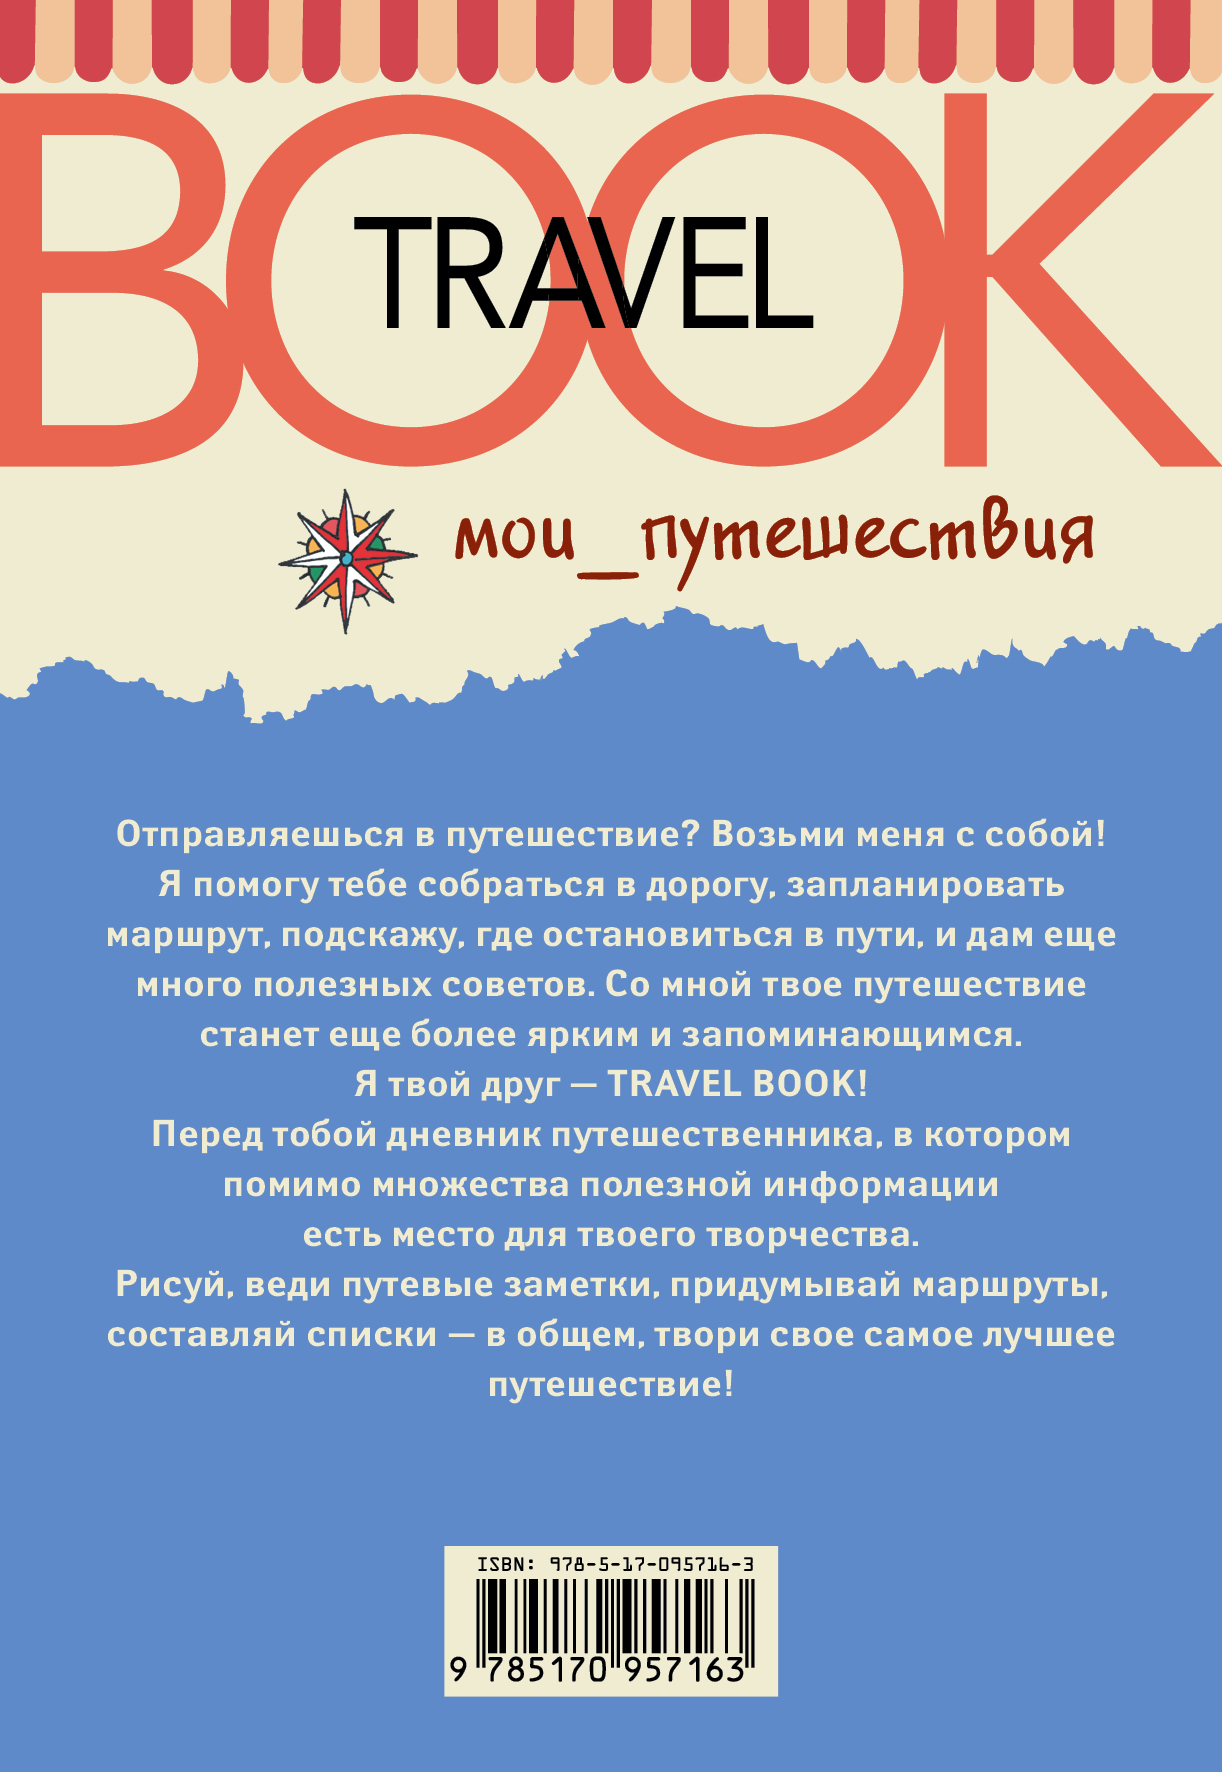  . Travel book